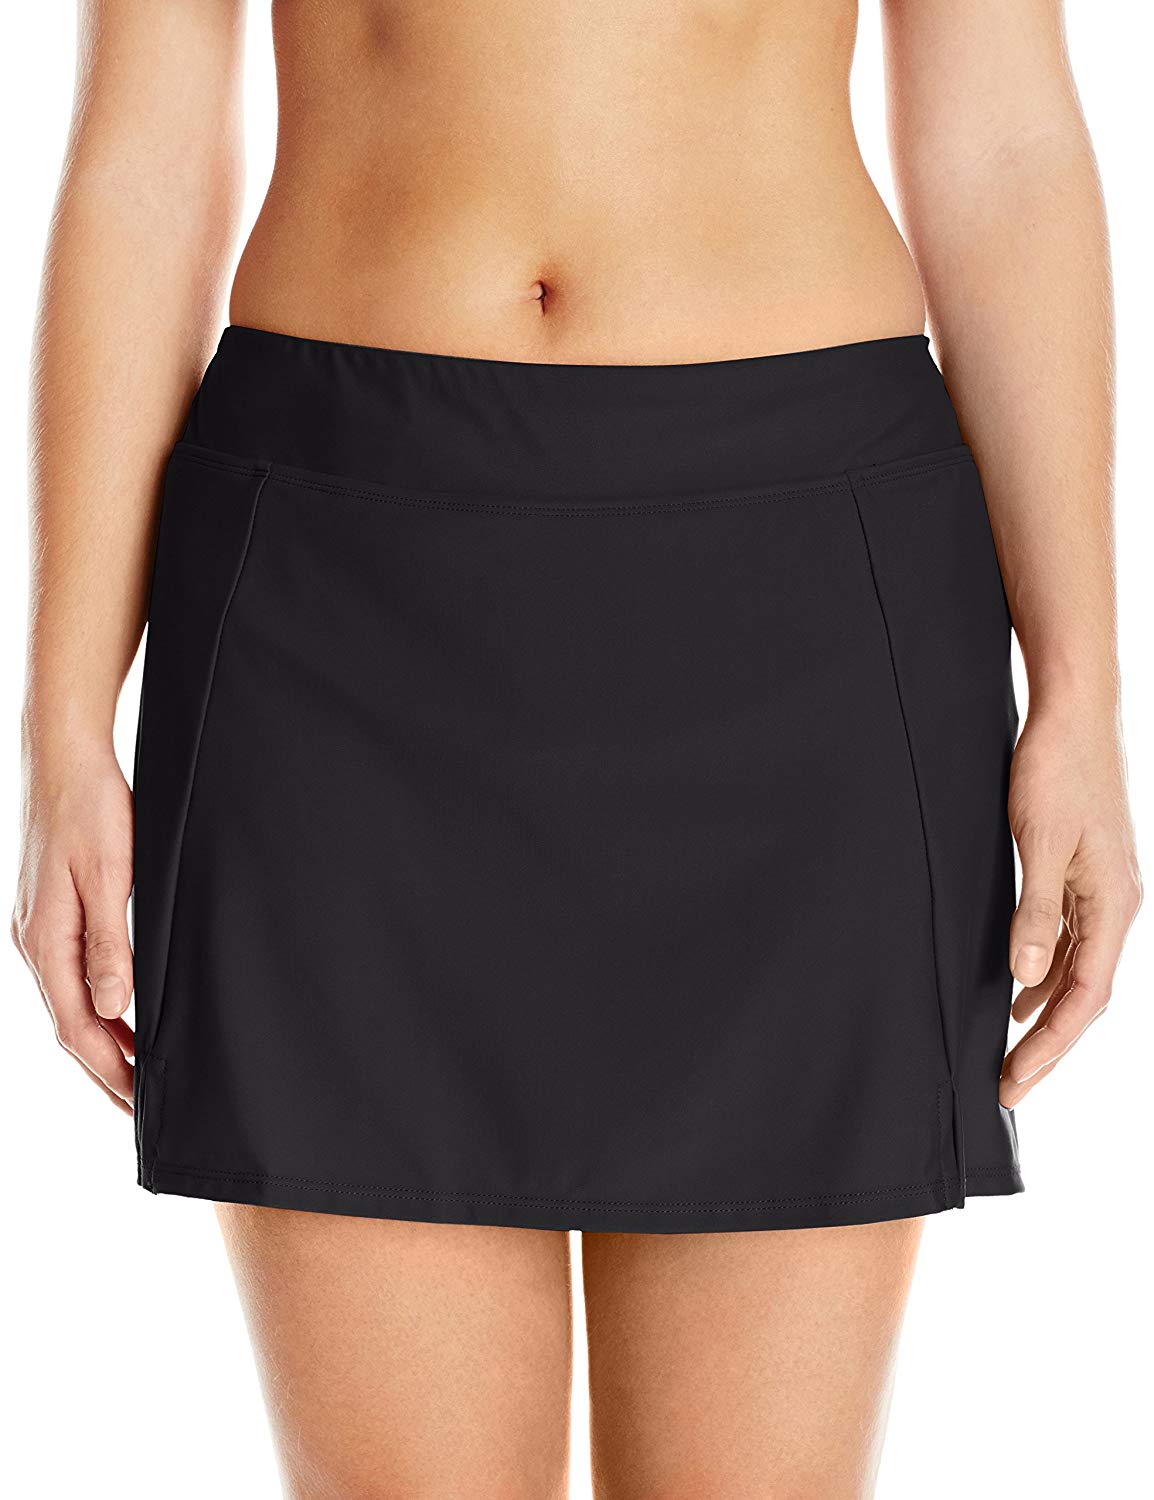 Maxine Of Hollywood Women's Plus-Size Side Slit Swim Skirt, Black, Size ...